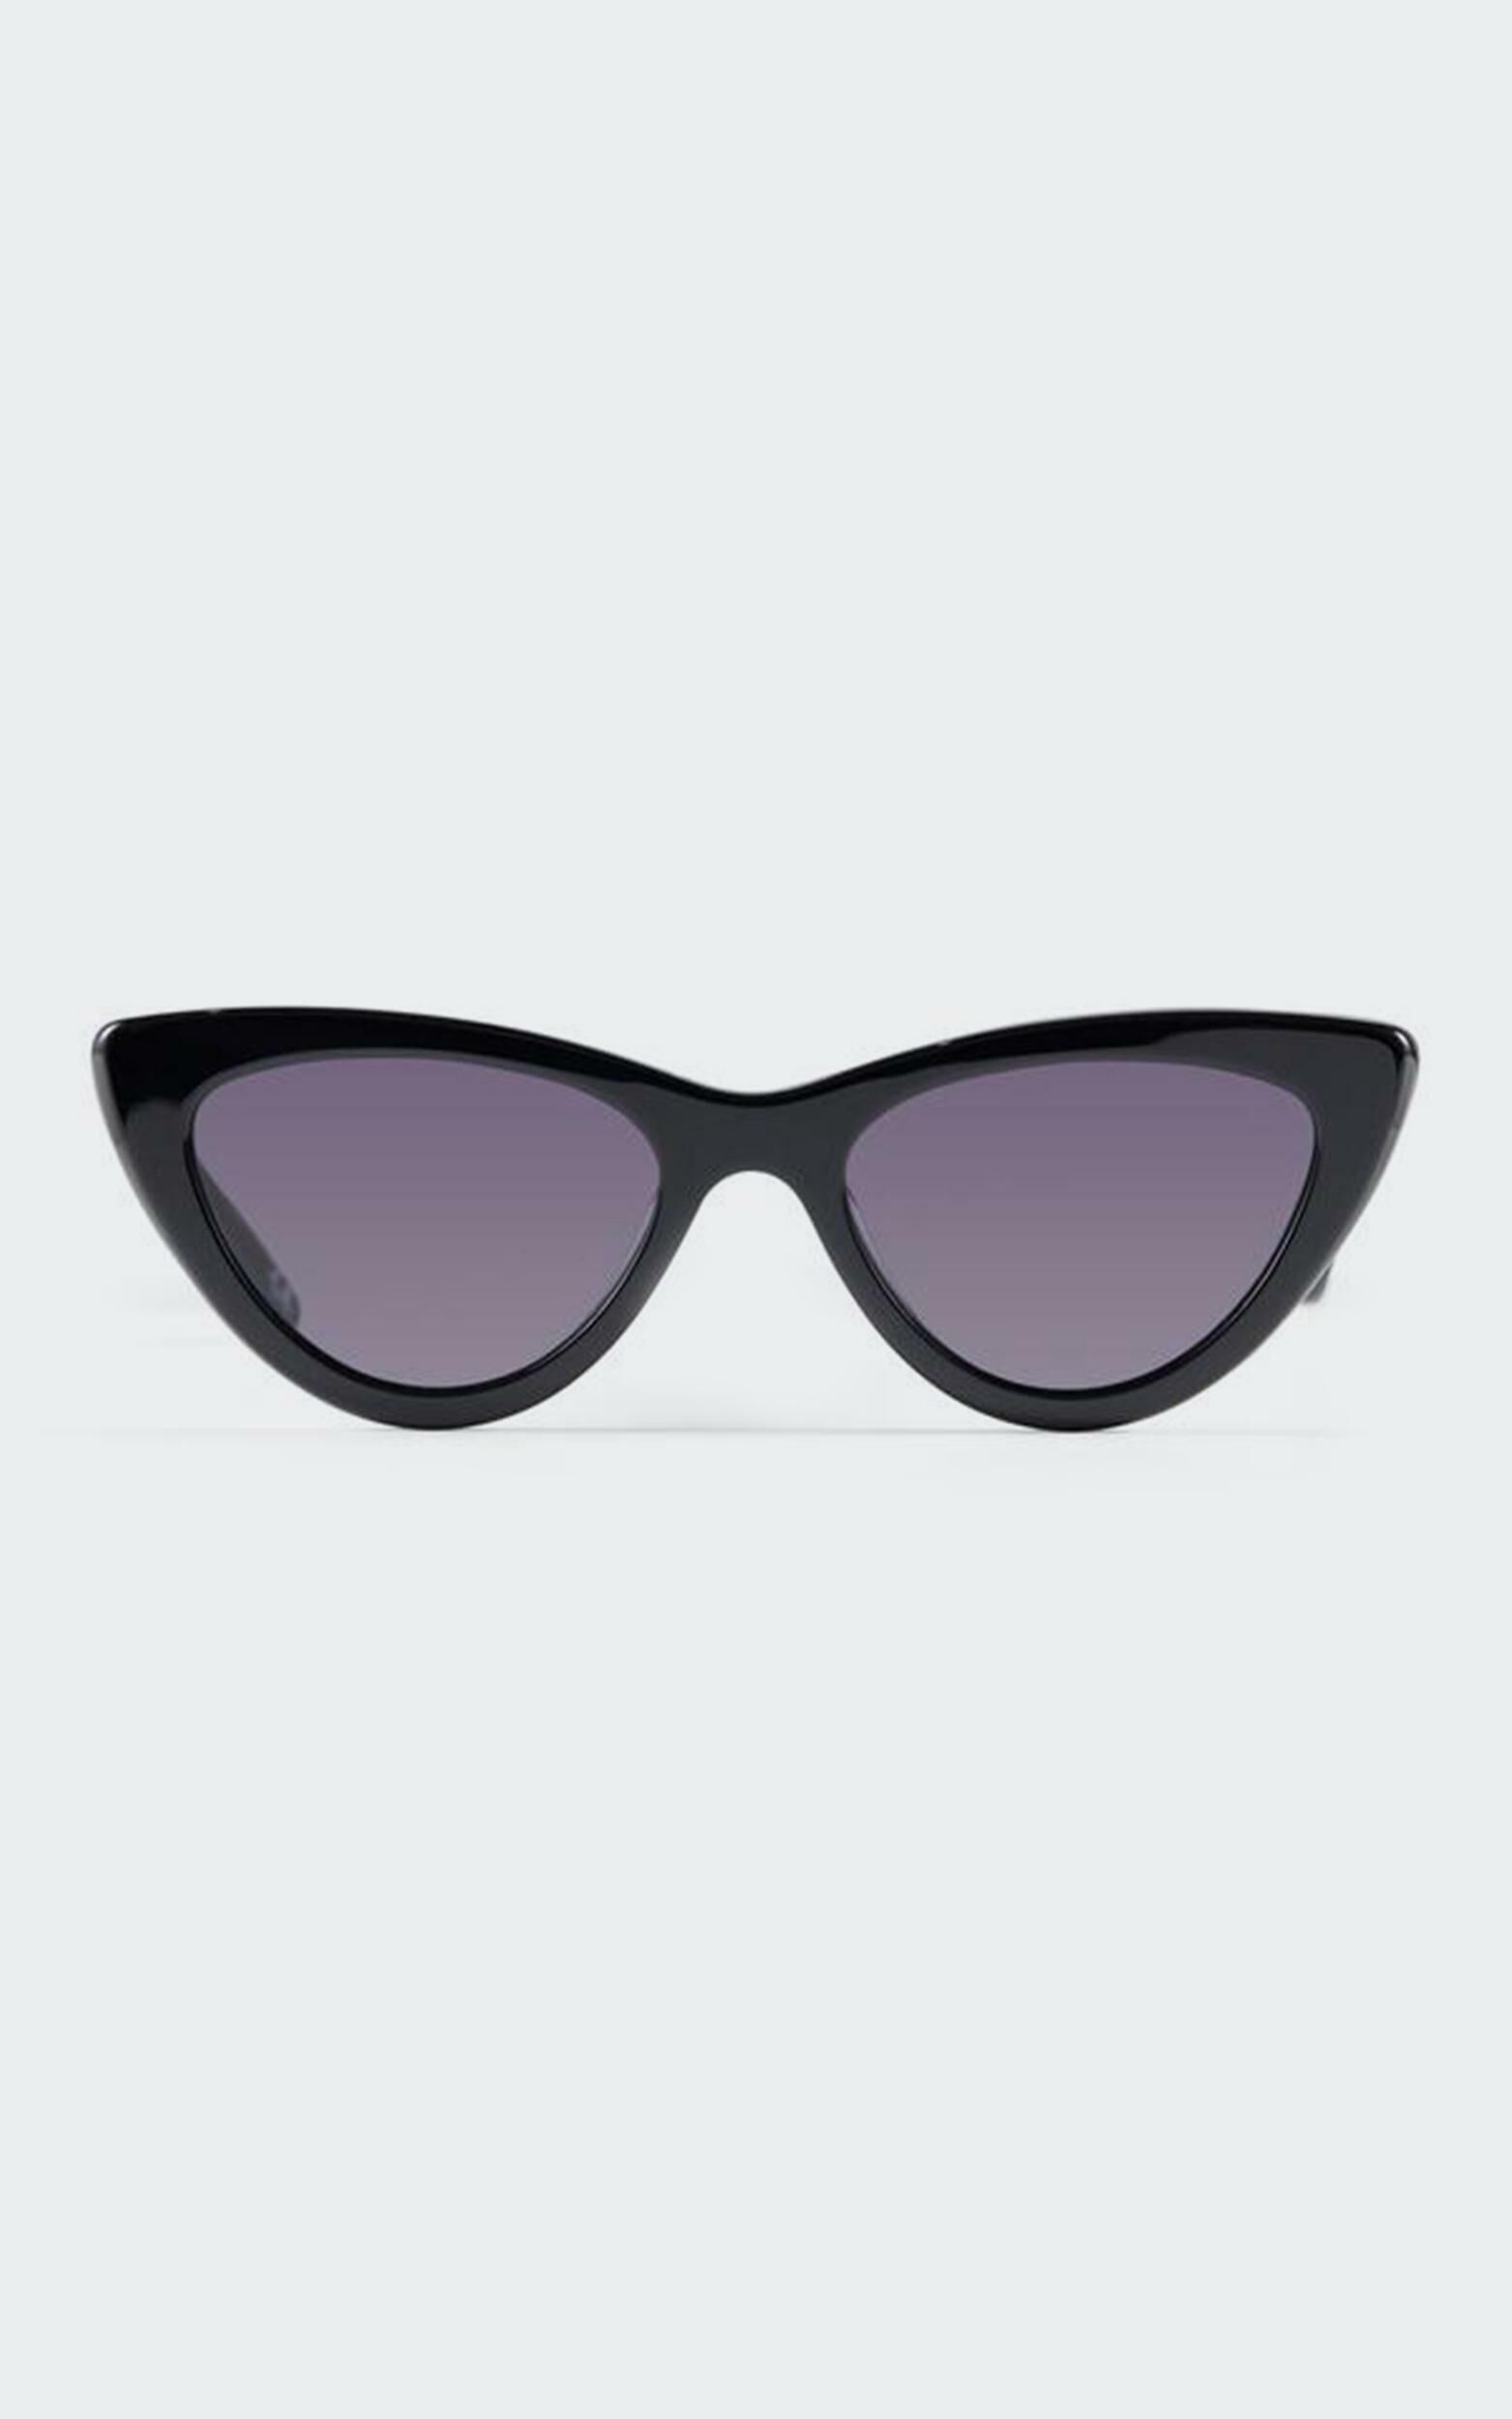 Luv Lou - The Leui Sunglasses in Black, Black